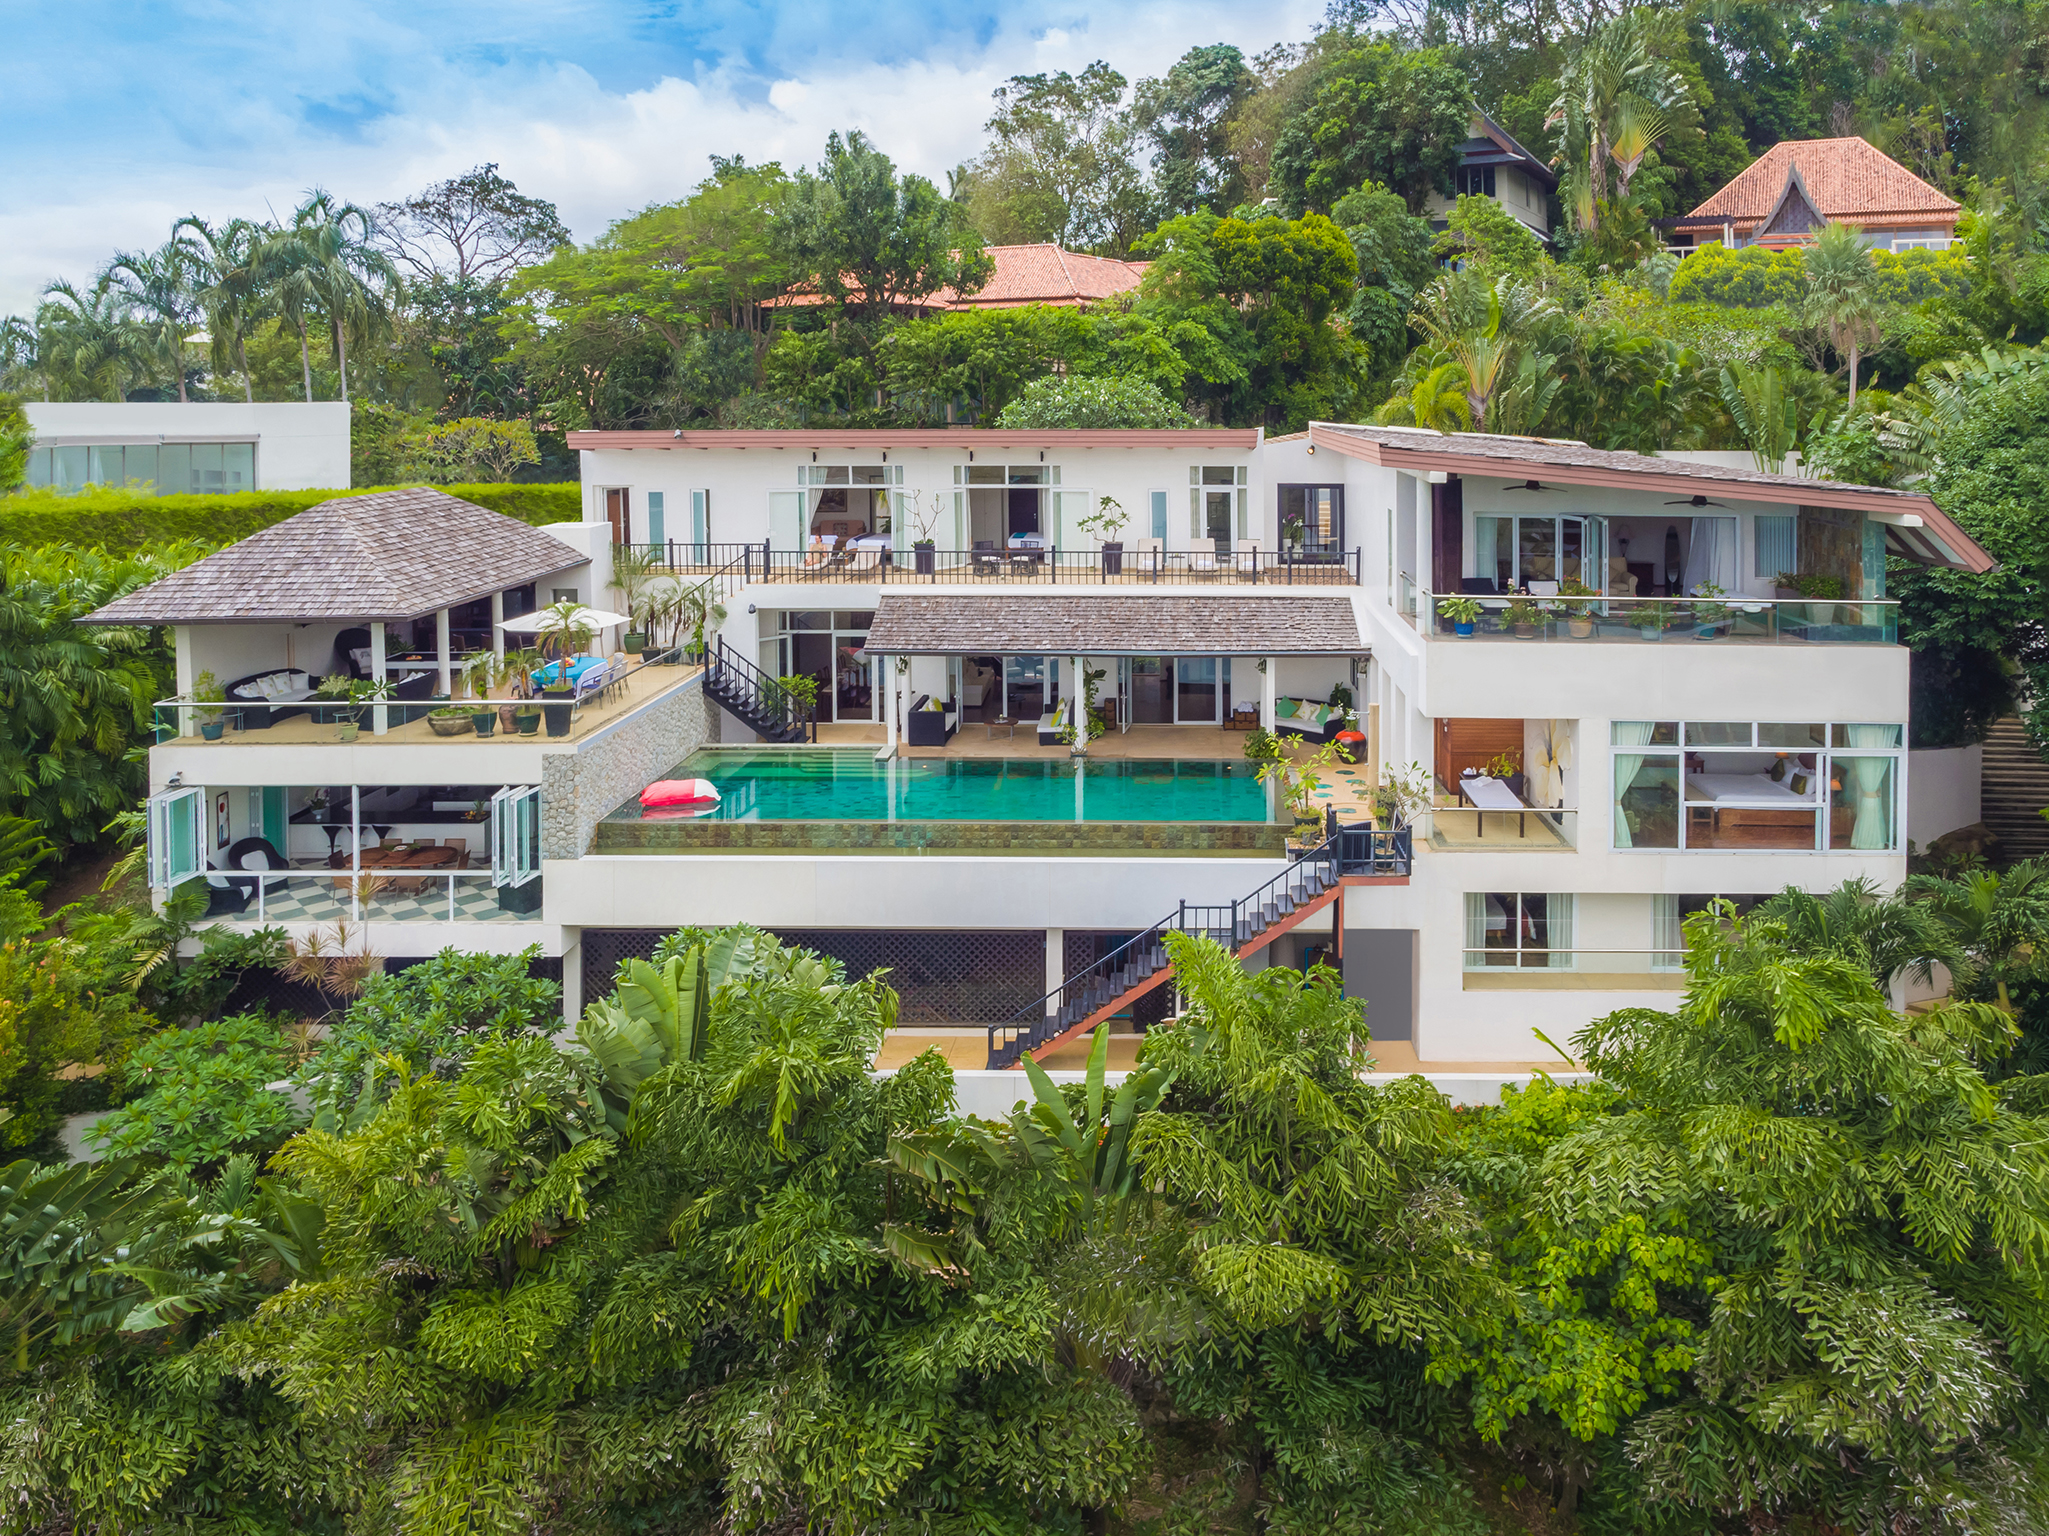 Luxury pool villa Amanzi